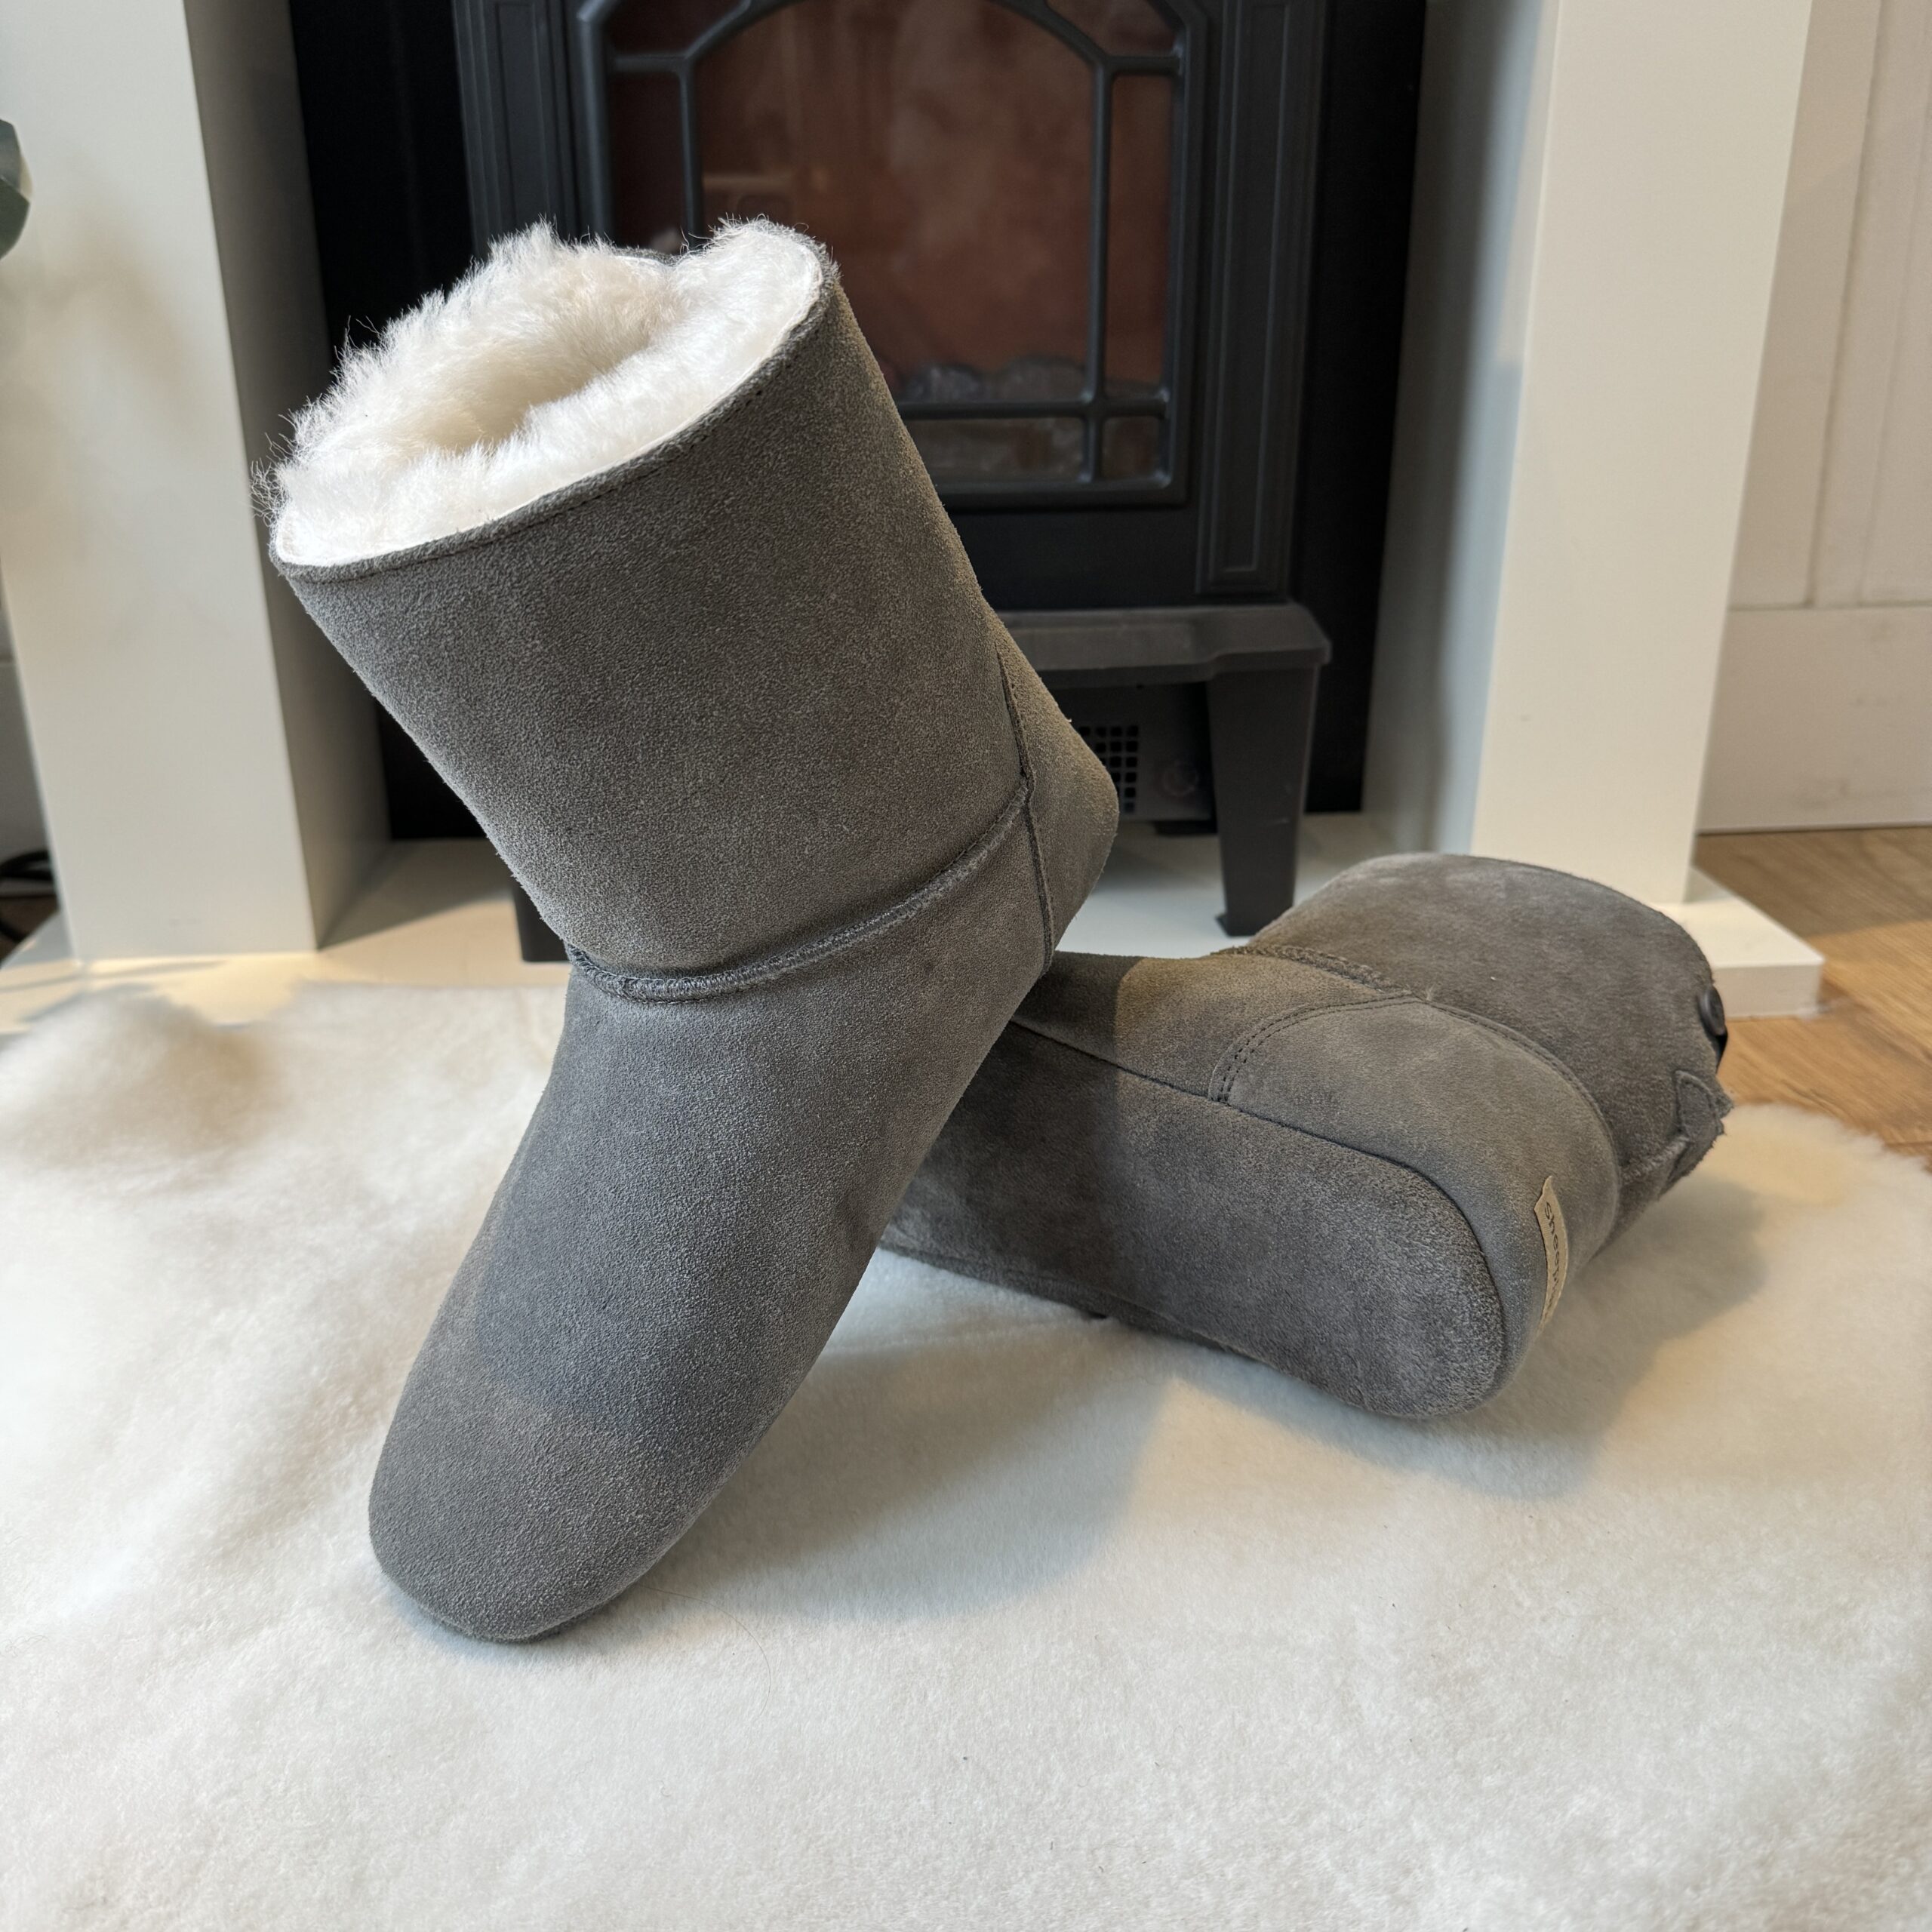 Luxury Sheepskin Indoor Slipper Boots - Size 8 - Photoshoot Pair Grey ...